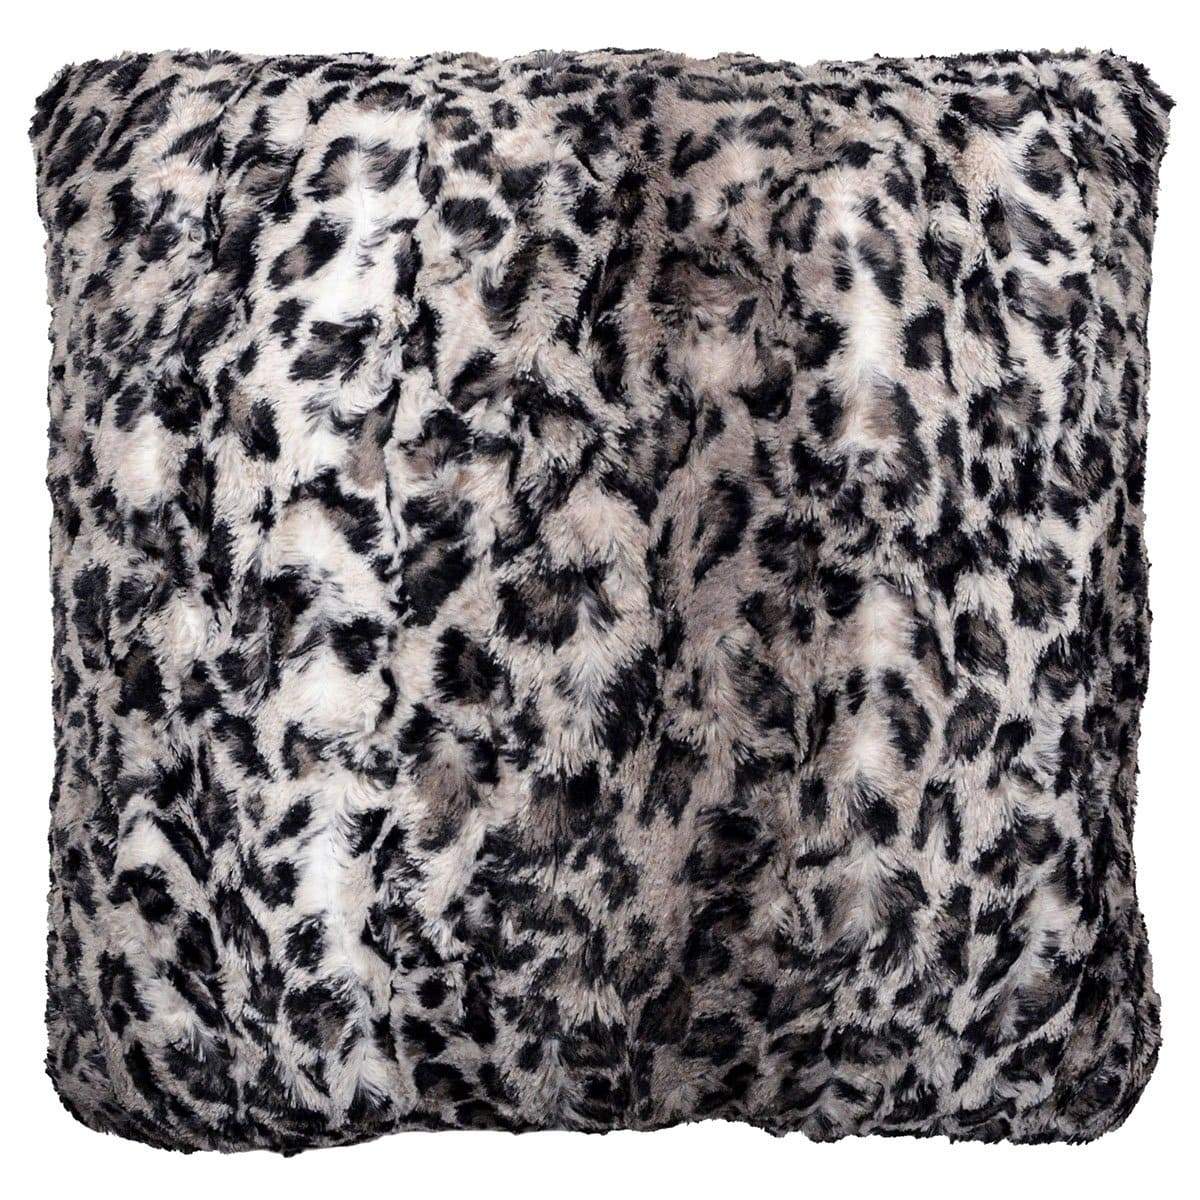 Pillow Sham - Luxury Faux Fur Savannah Cat in Gray